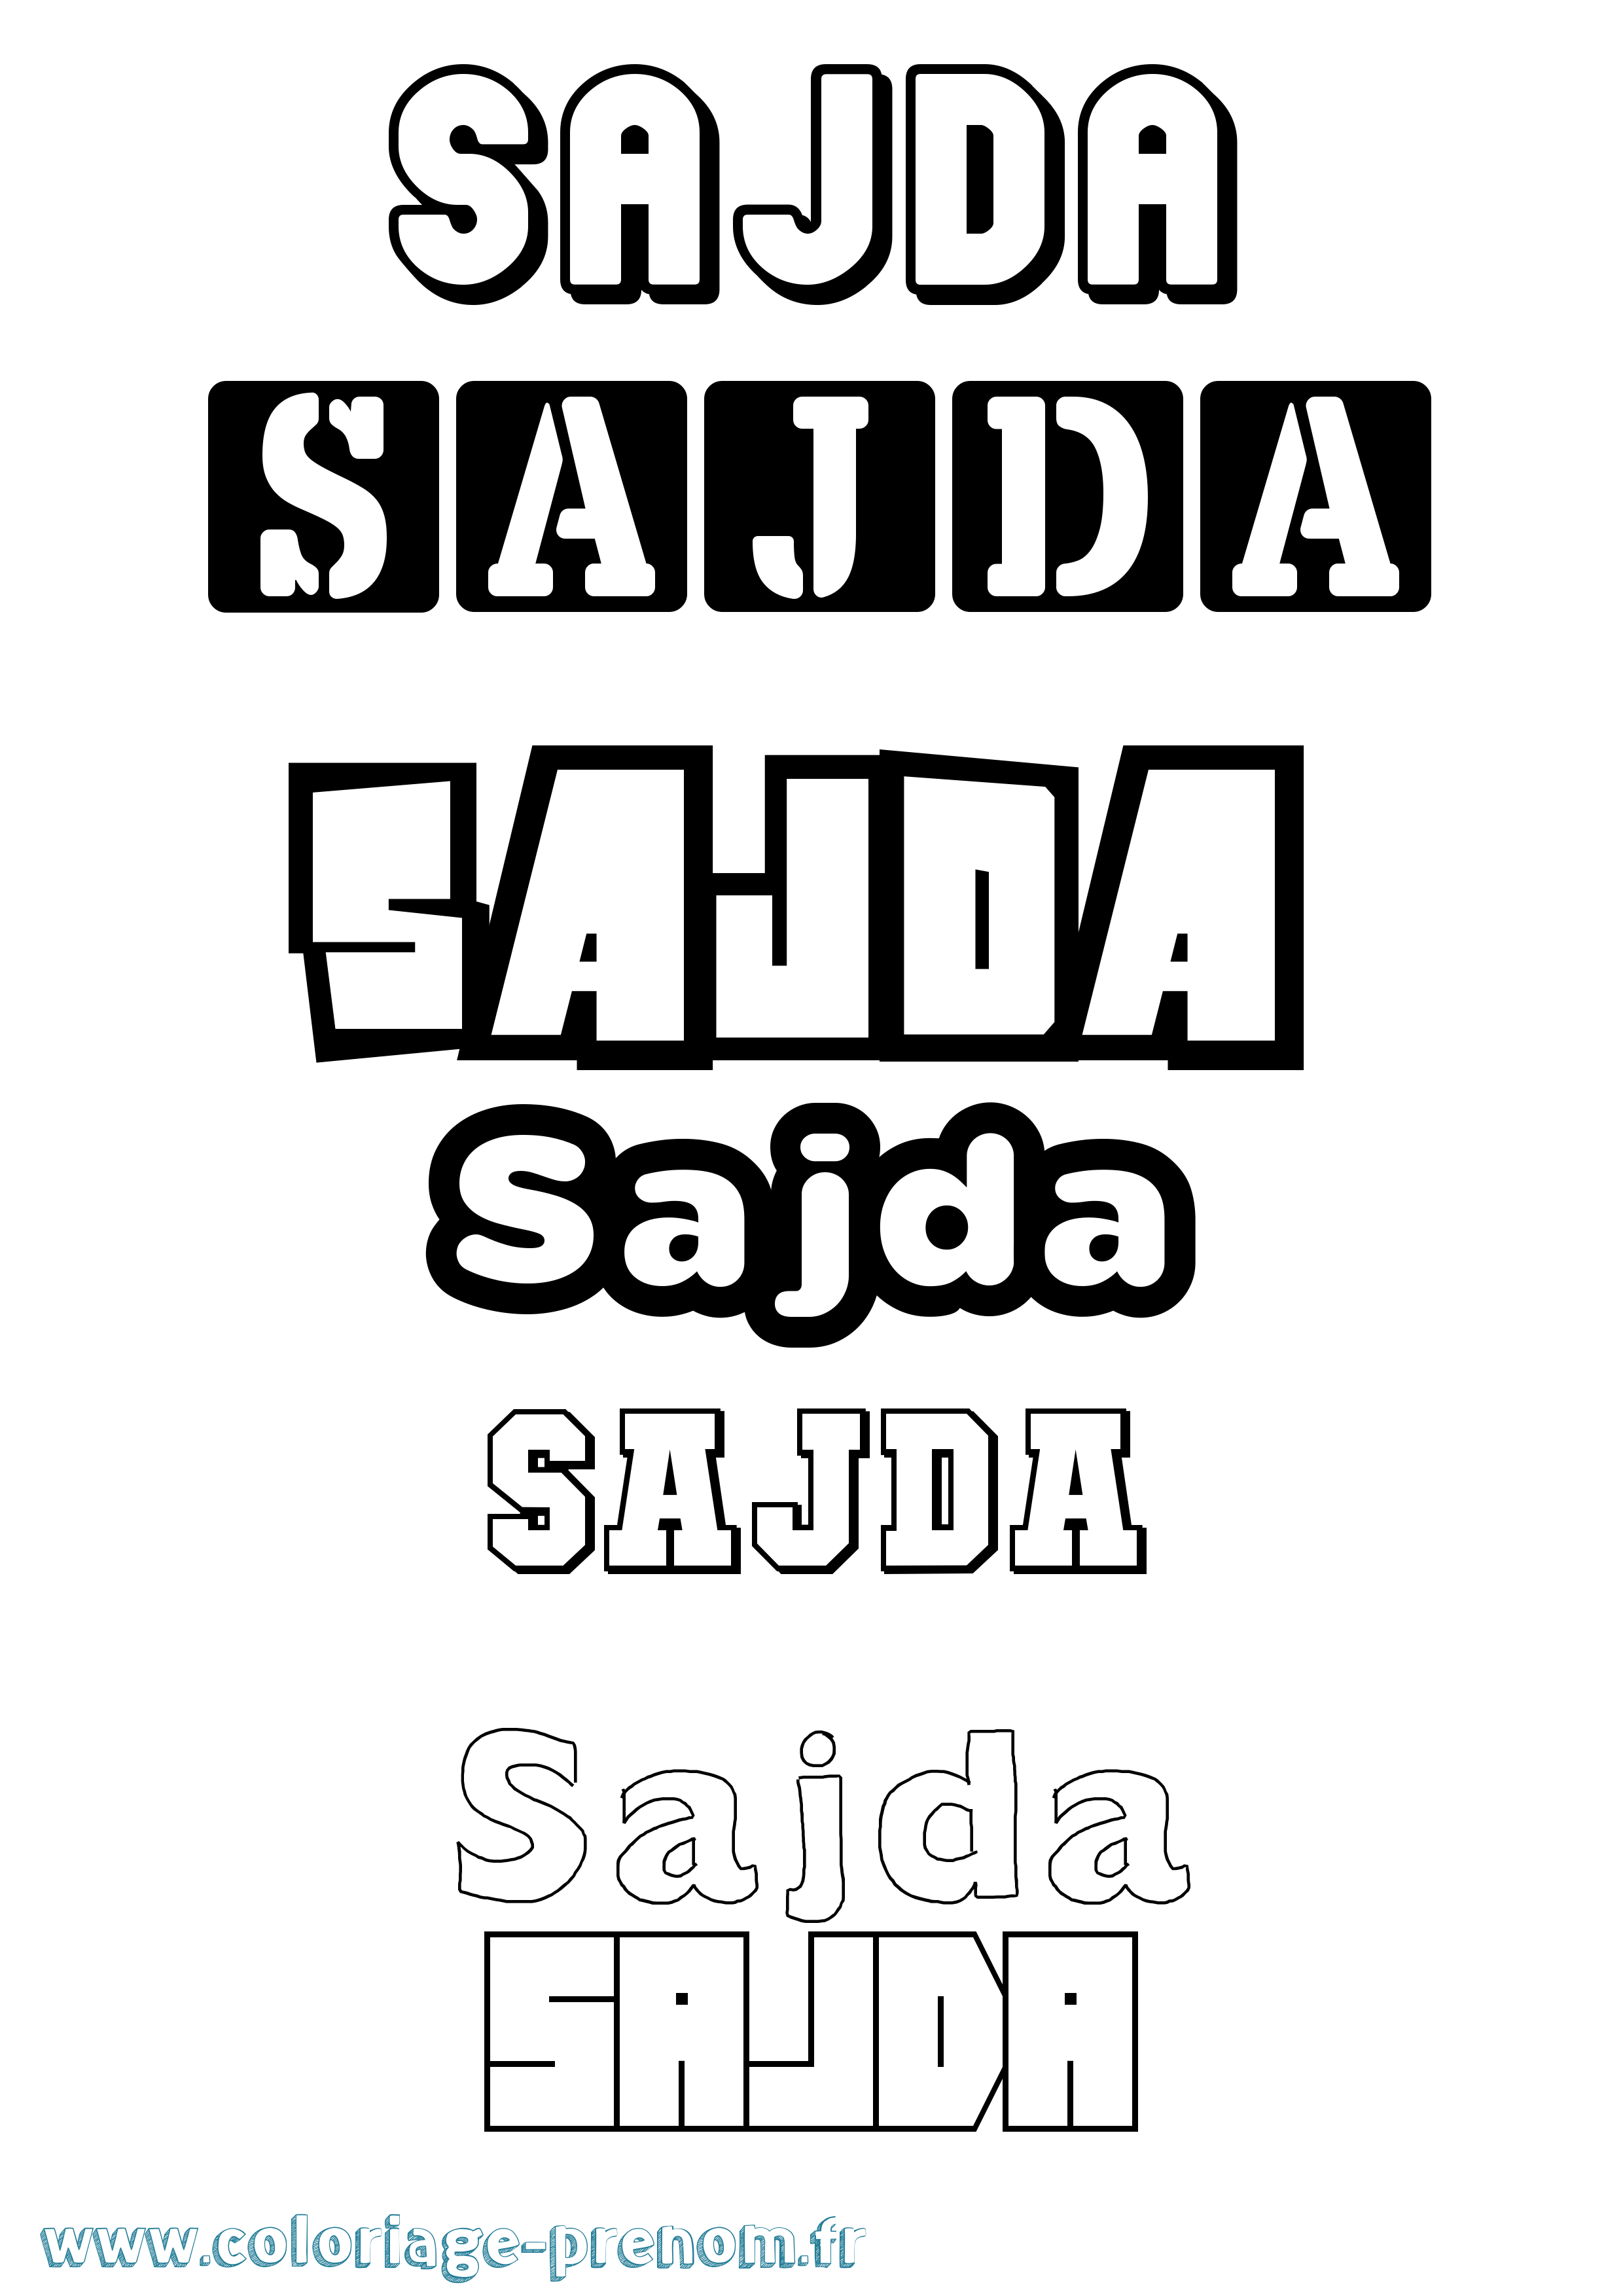 Coloriage prénom Sajda Simple